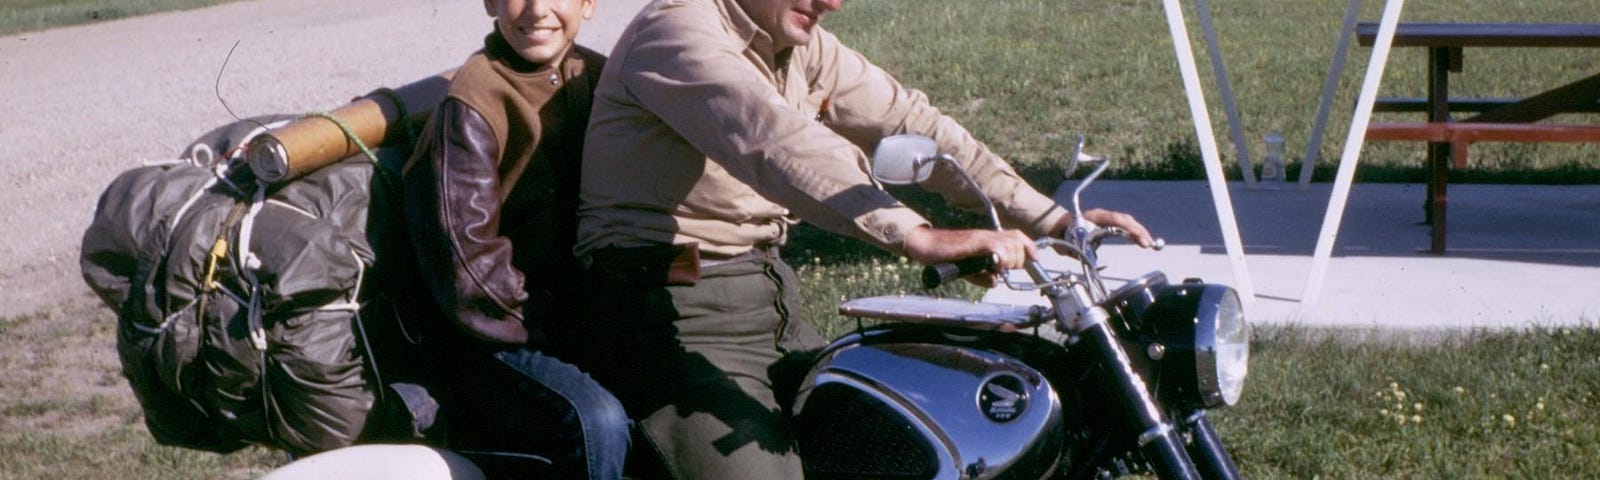 Robert Pirsig and his son Chris on the Honda Superhawk motorbike